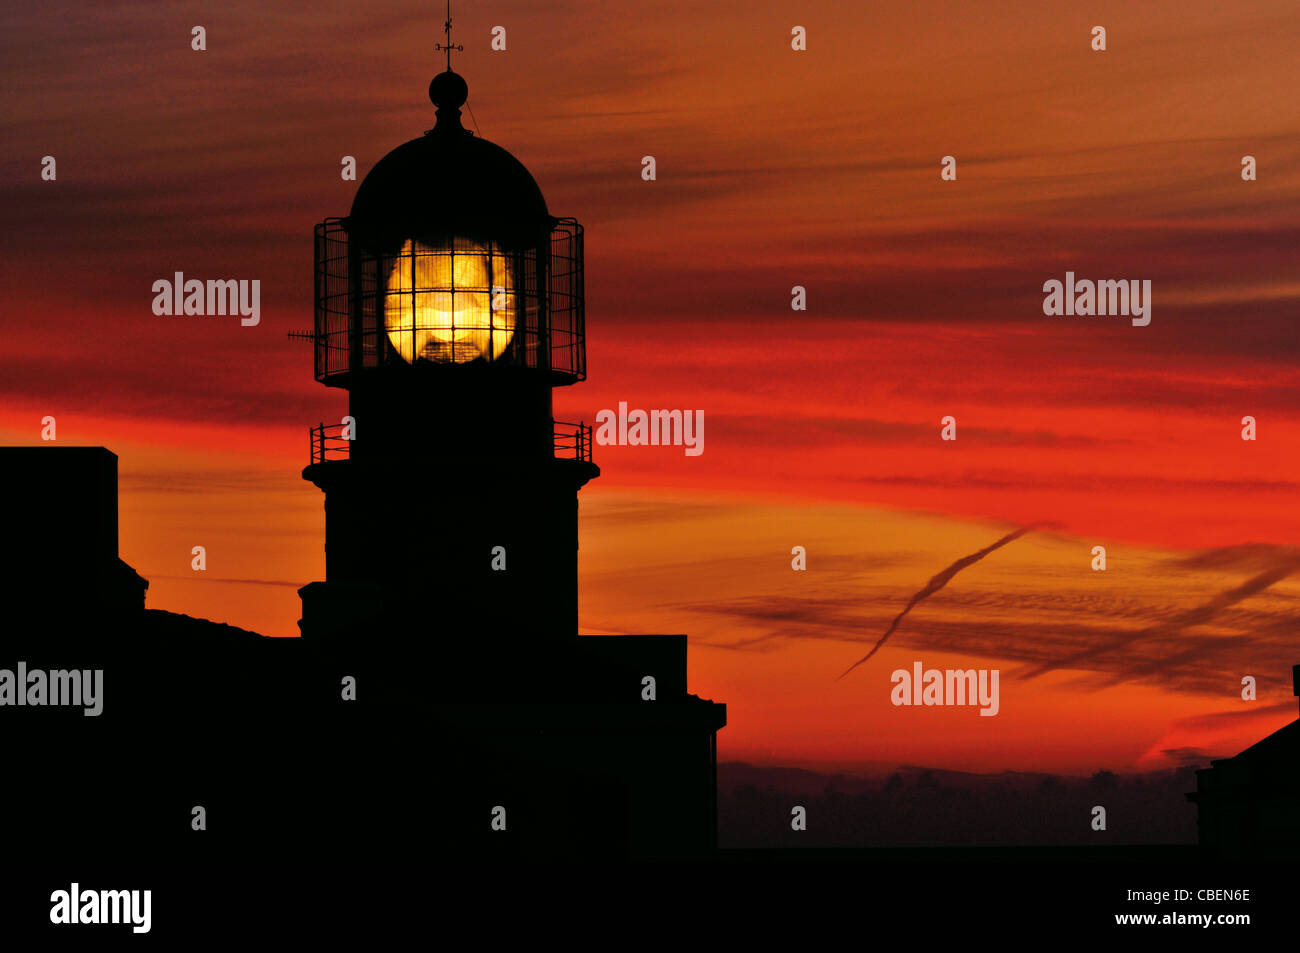 Portugal, Algarve: Sonnenuntergang am Leuchtturm von Kap St. Vincent Stockfoto